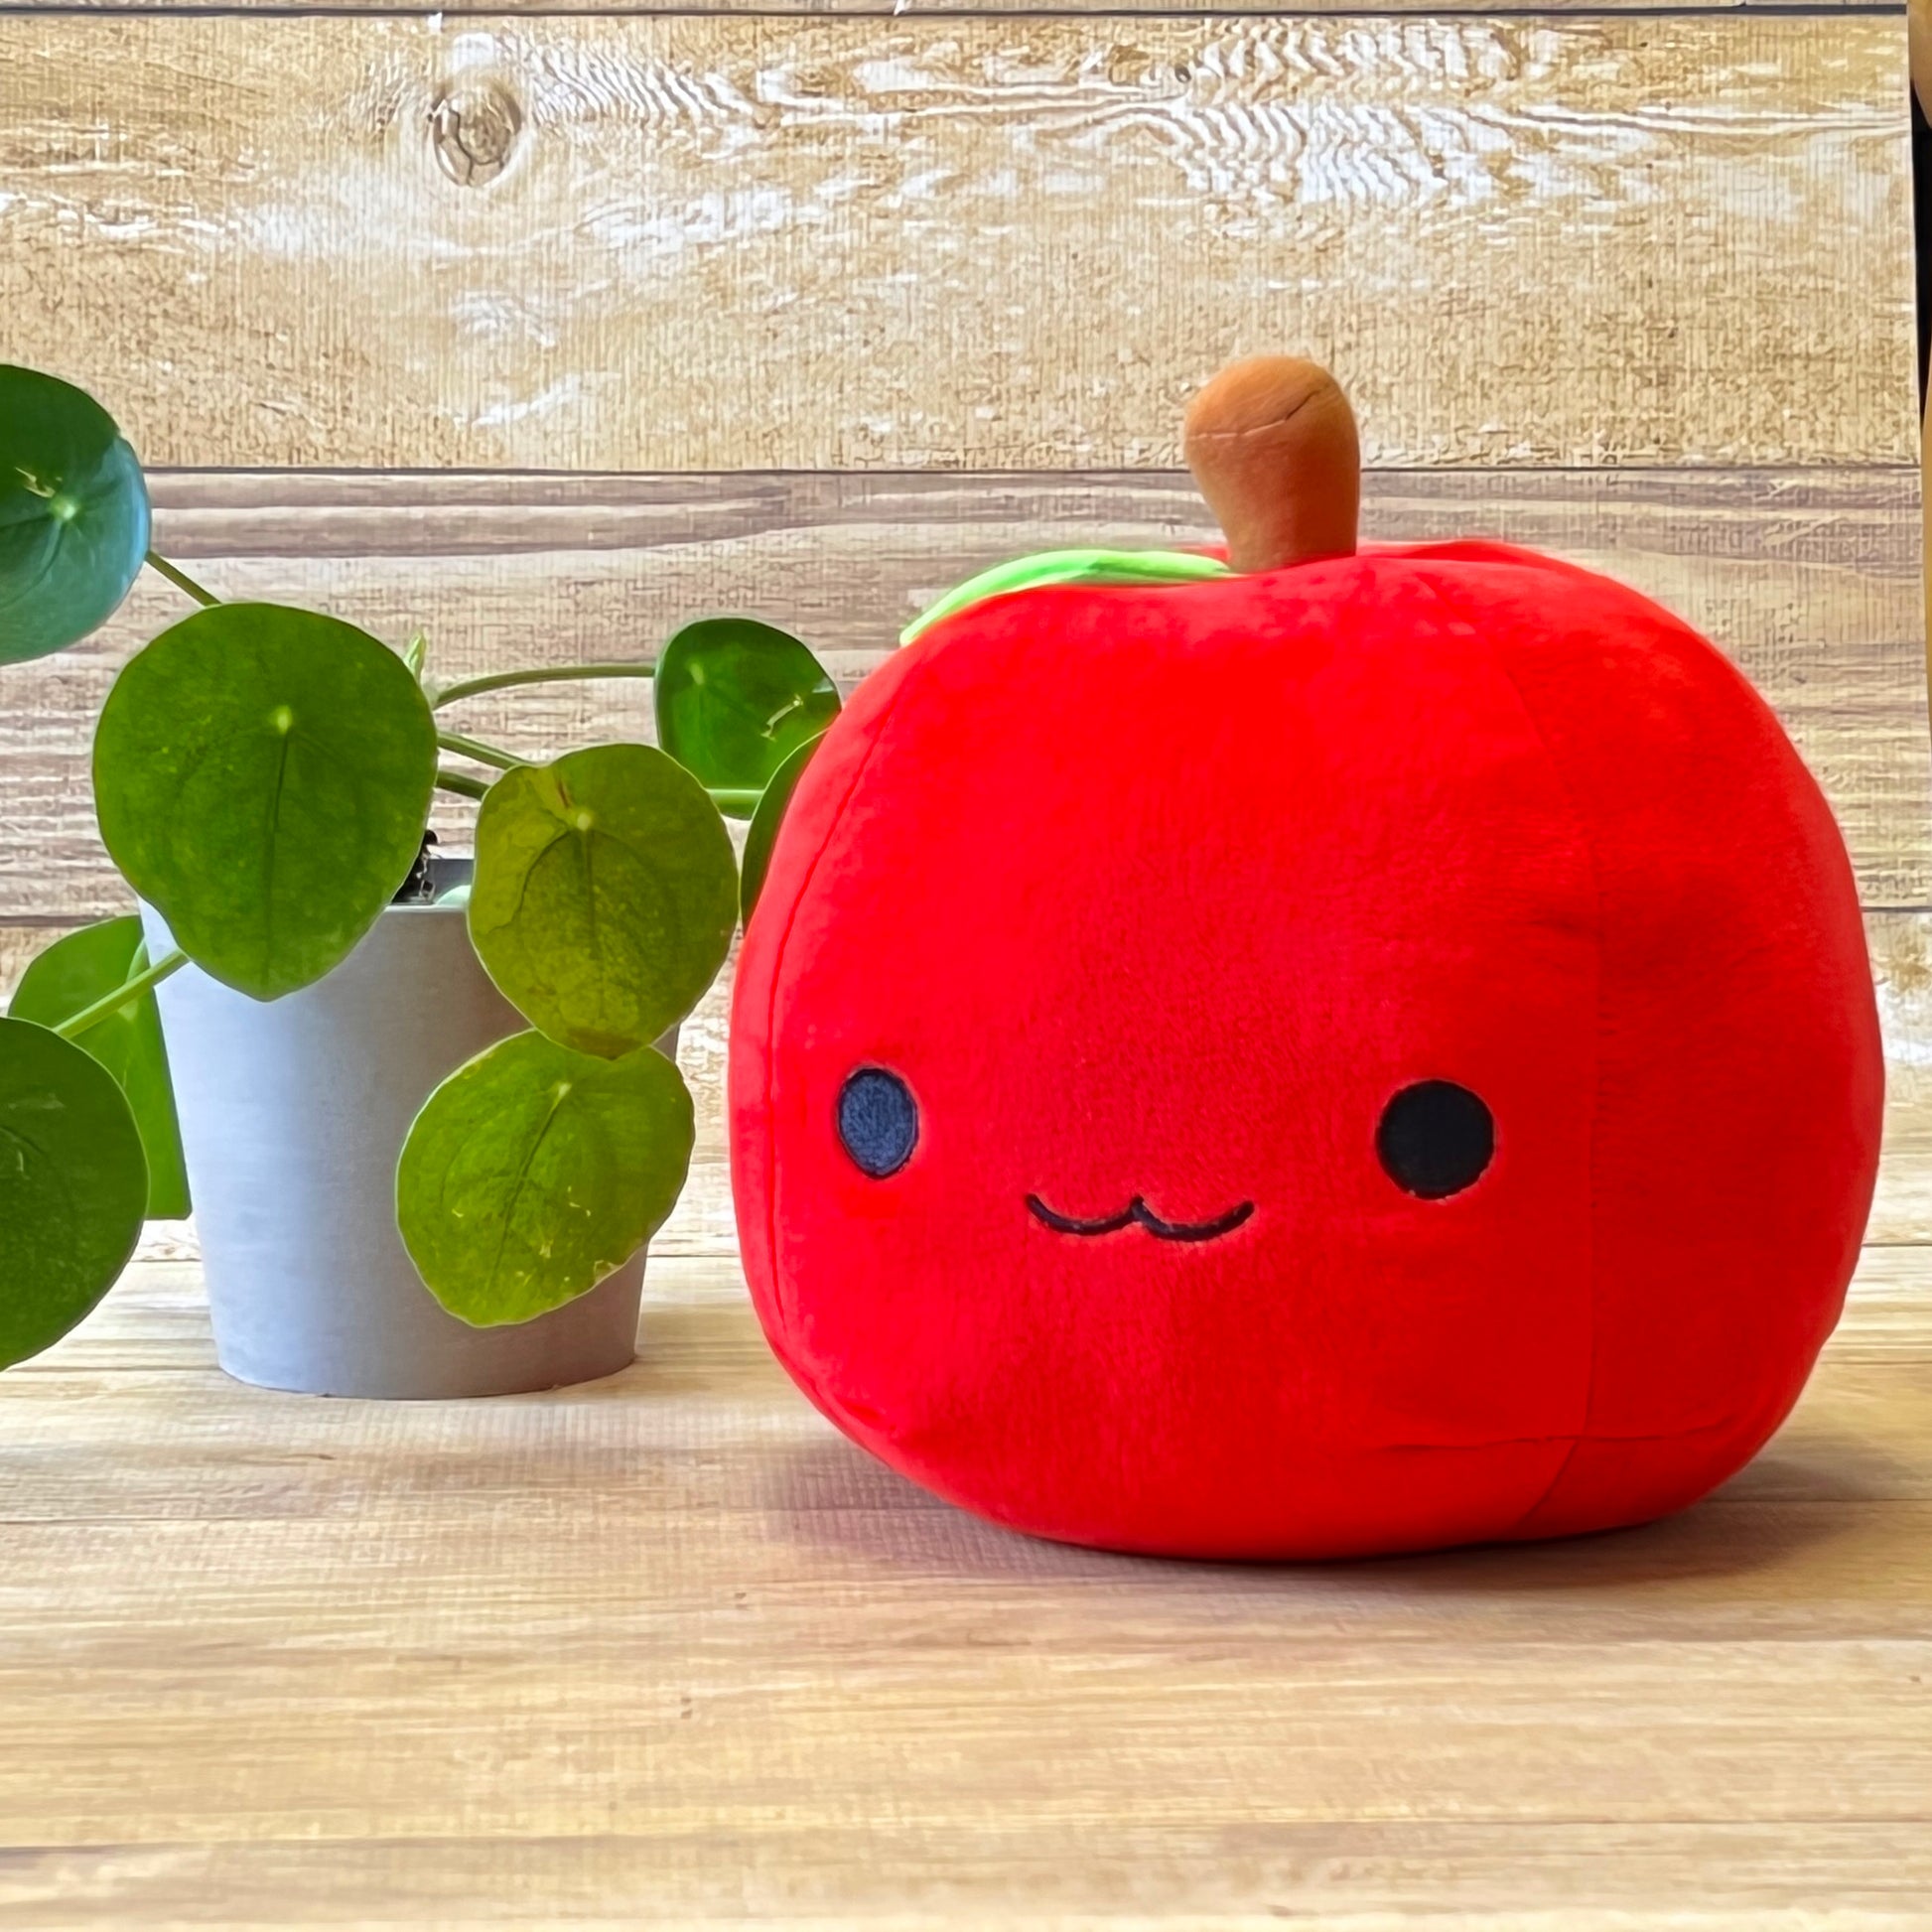 Impression of Apple Fruit Stuffed Toy Ringochan Red